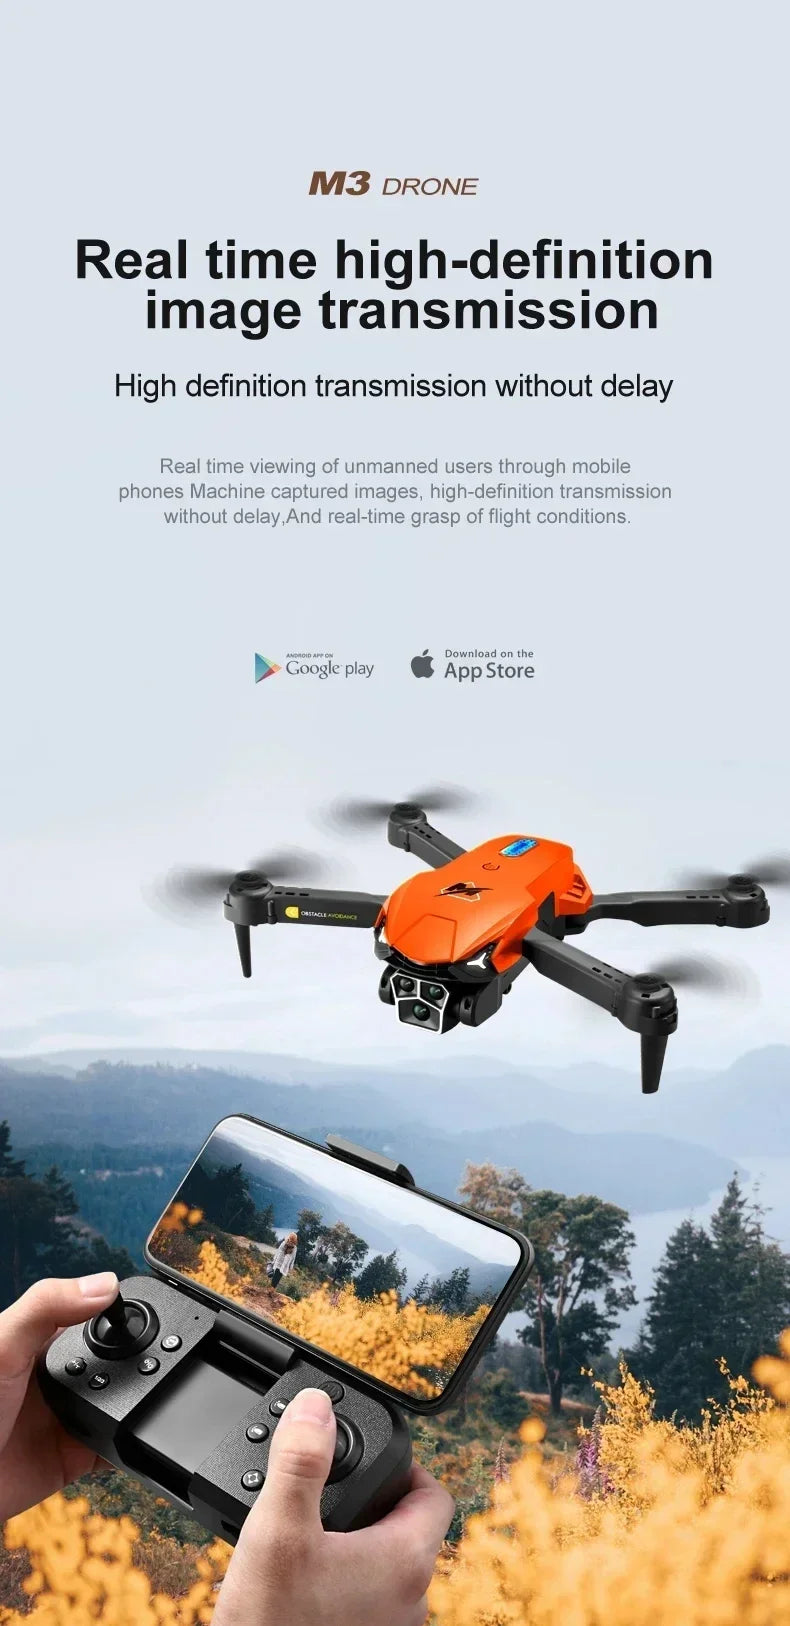 M3 Drone, m3 drone real time image higsrdesinoi